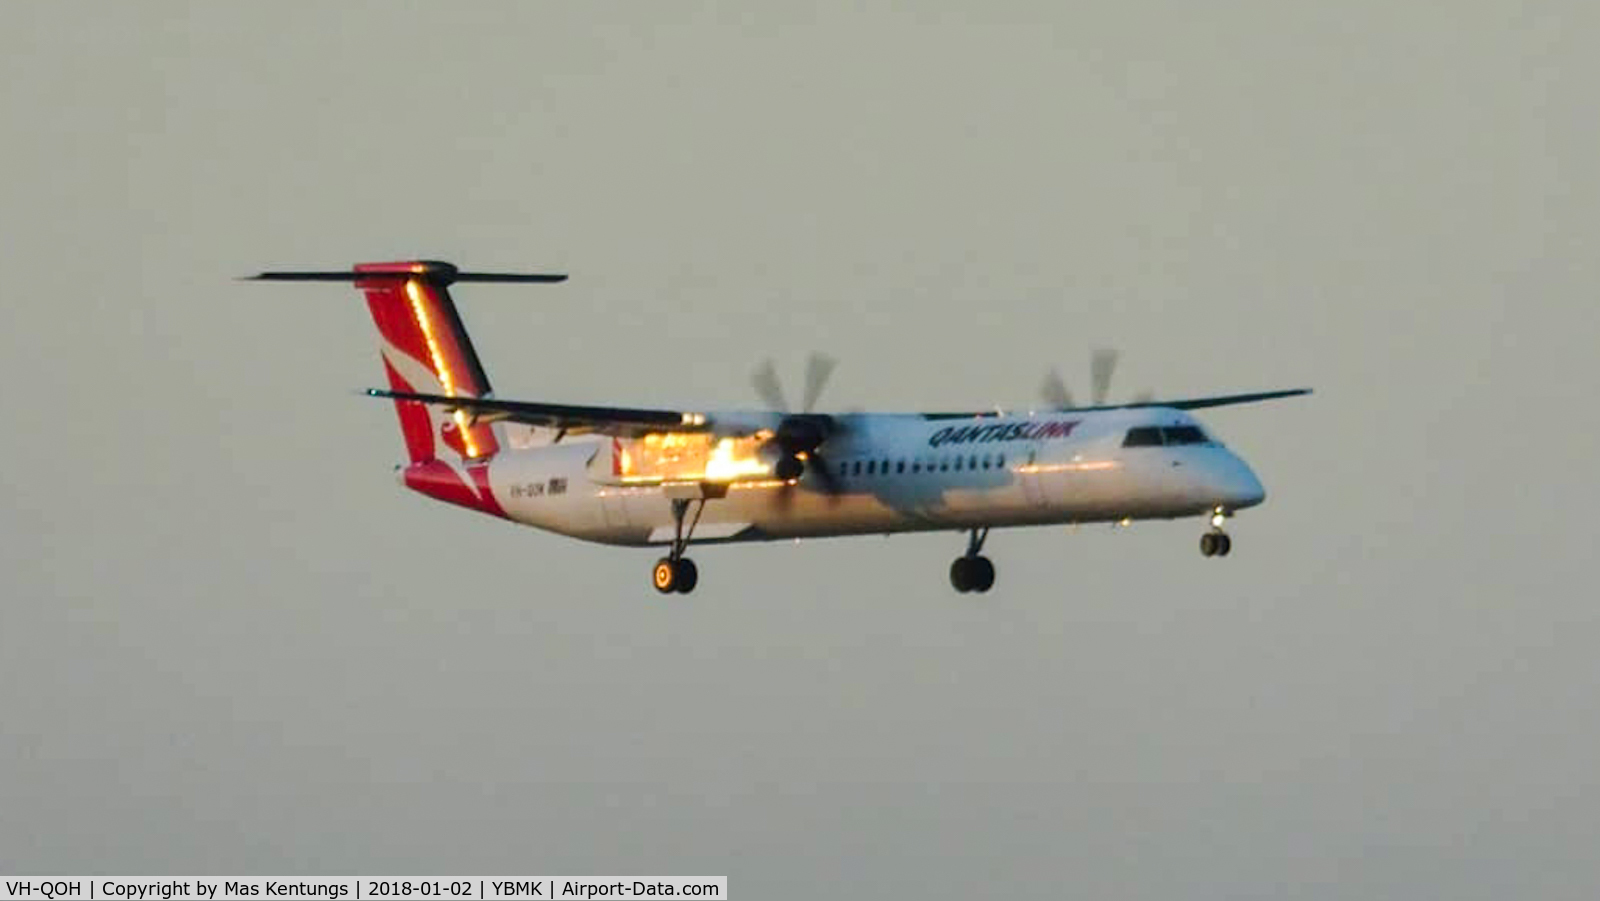 VH-QOH, 2006 Bombardier DHC-8-402 Dash 8 C/N 4132, this photo were taken at Mackay Airport